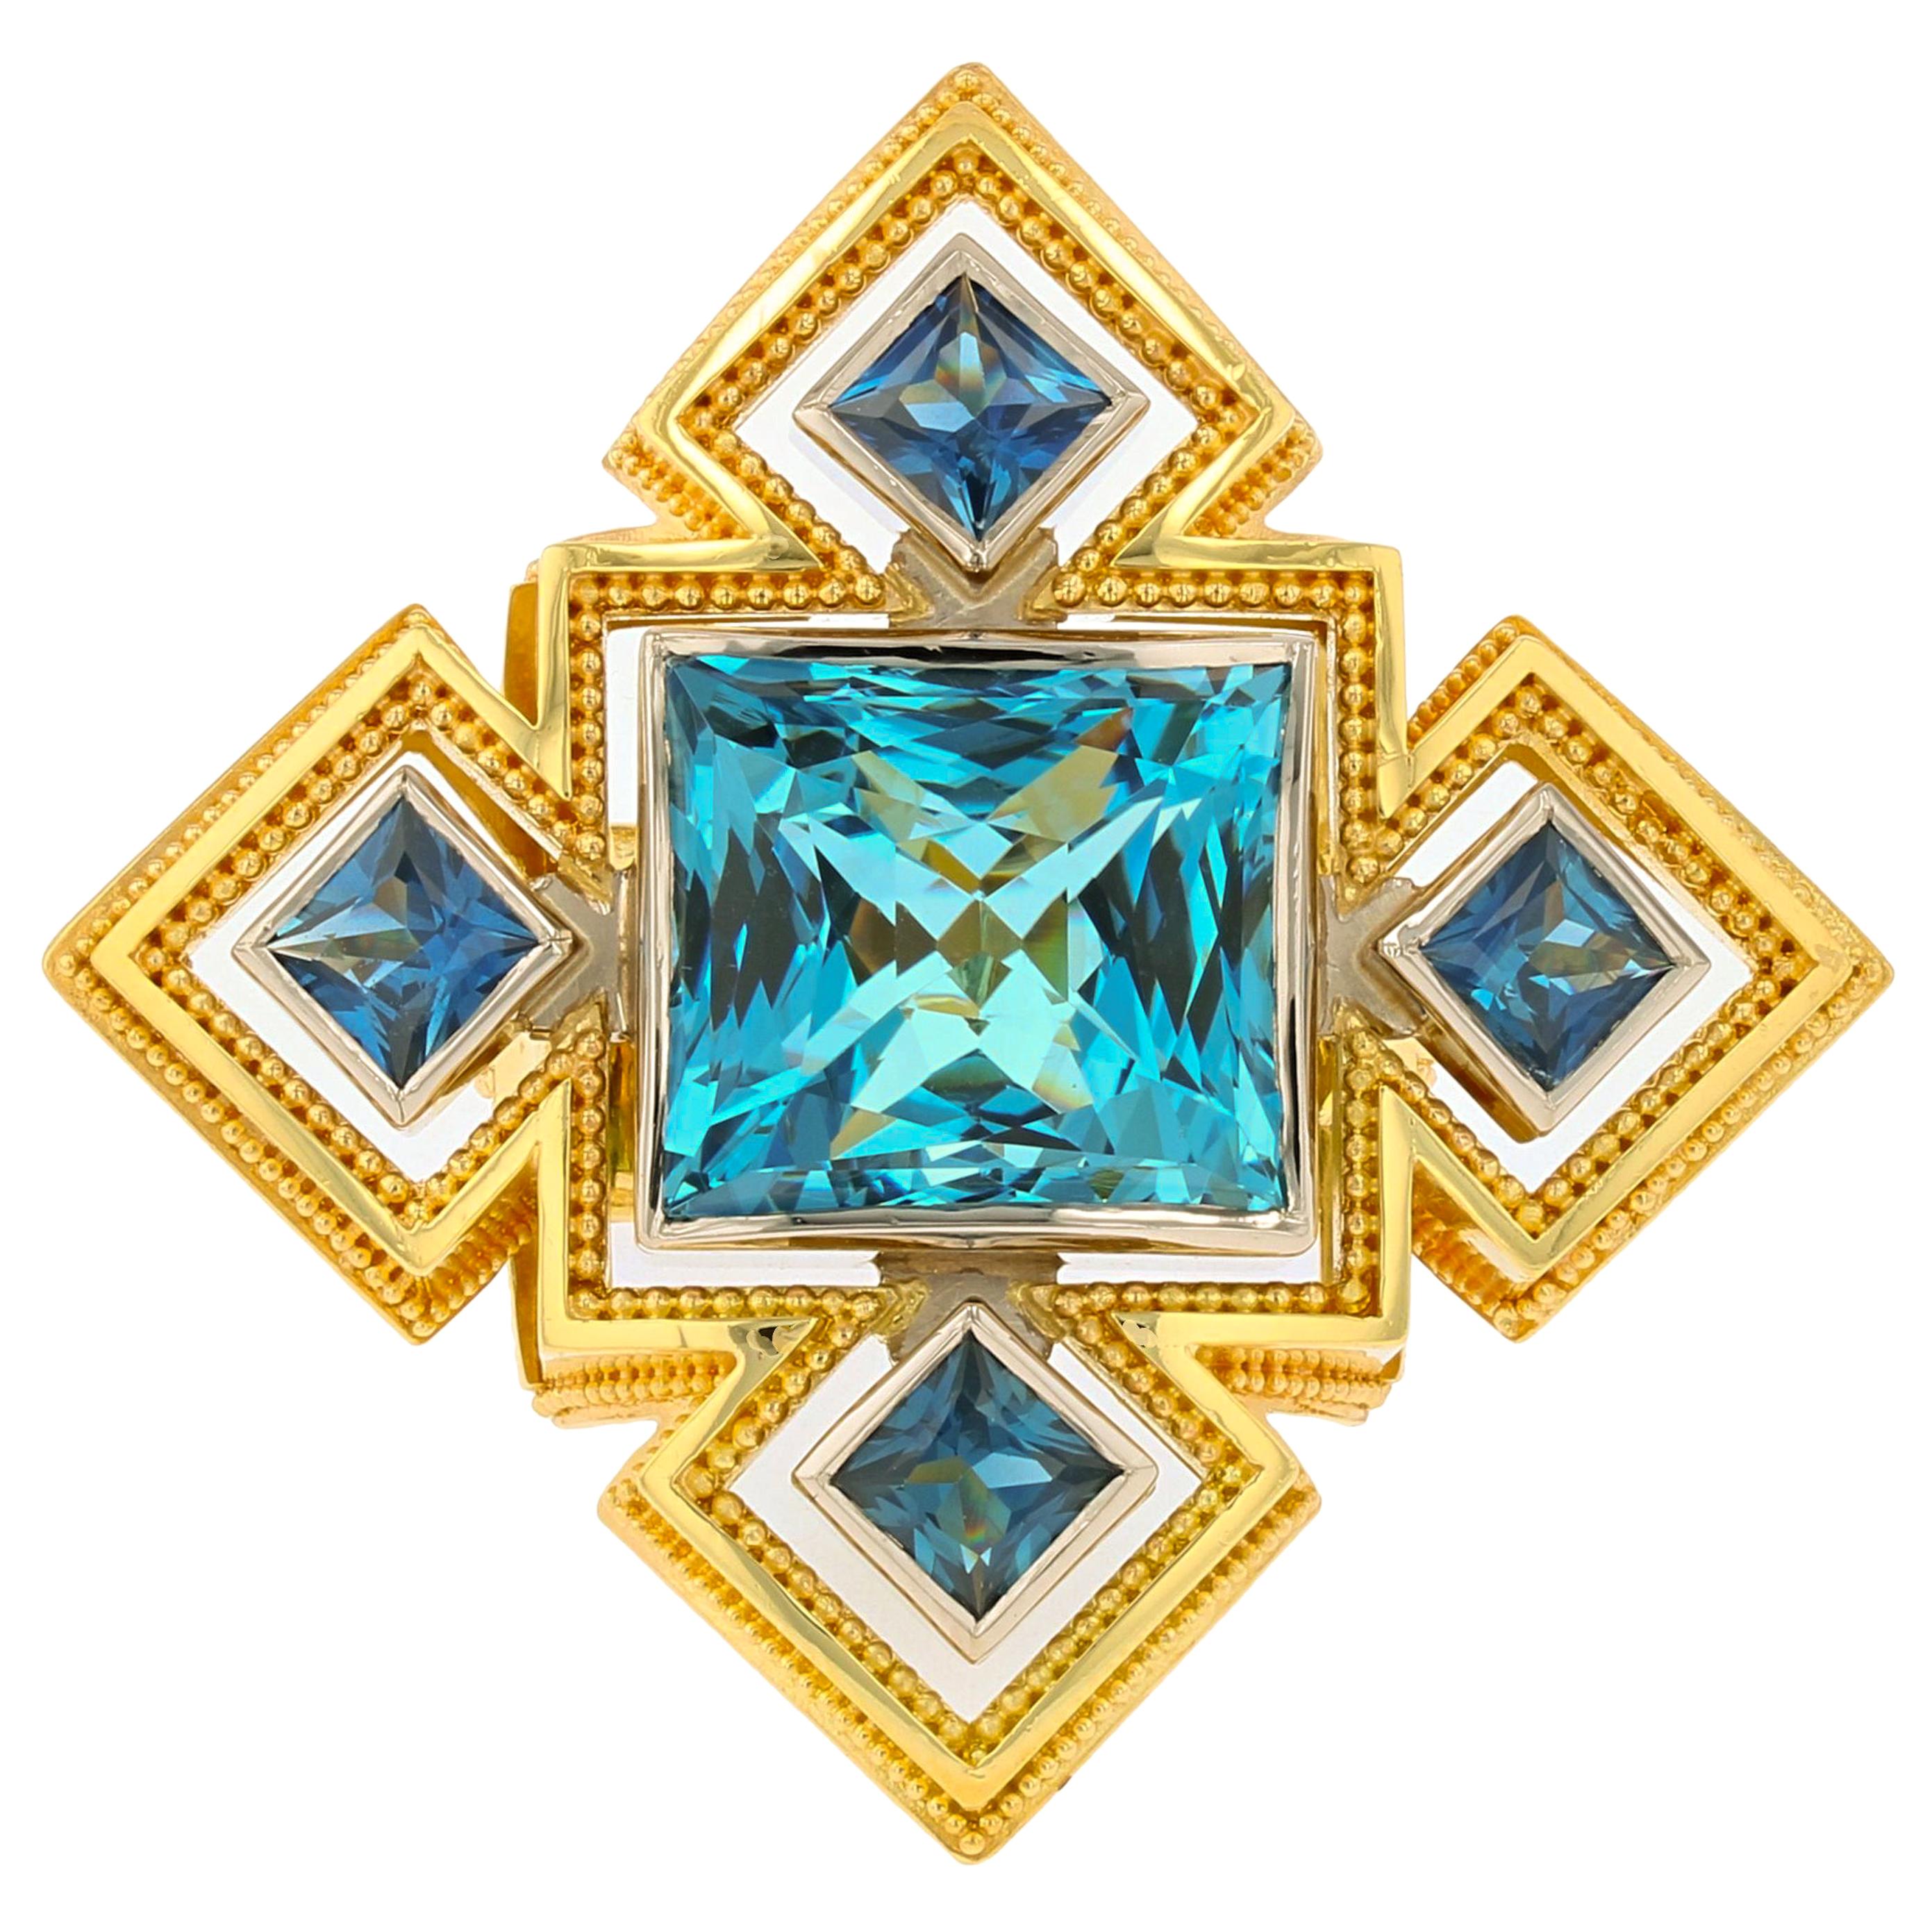 Bague granulation Kent Raible en aigue-marine, saphir bleu, platine et or 18 carats